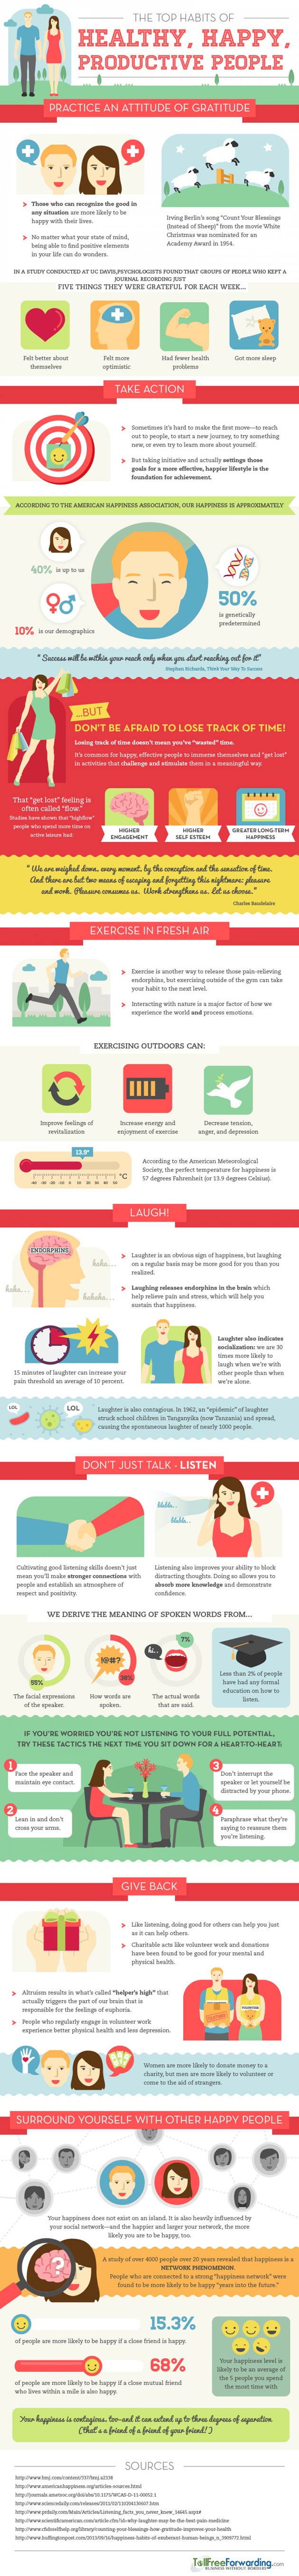 Habits of Happy People Infographic